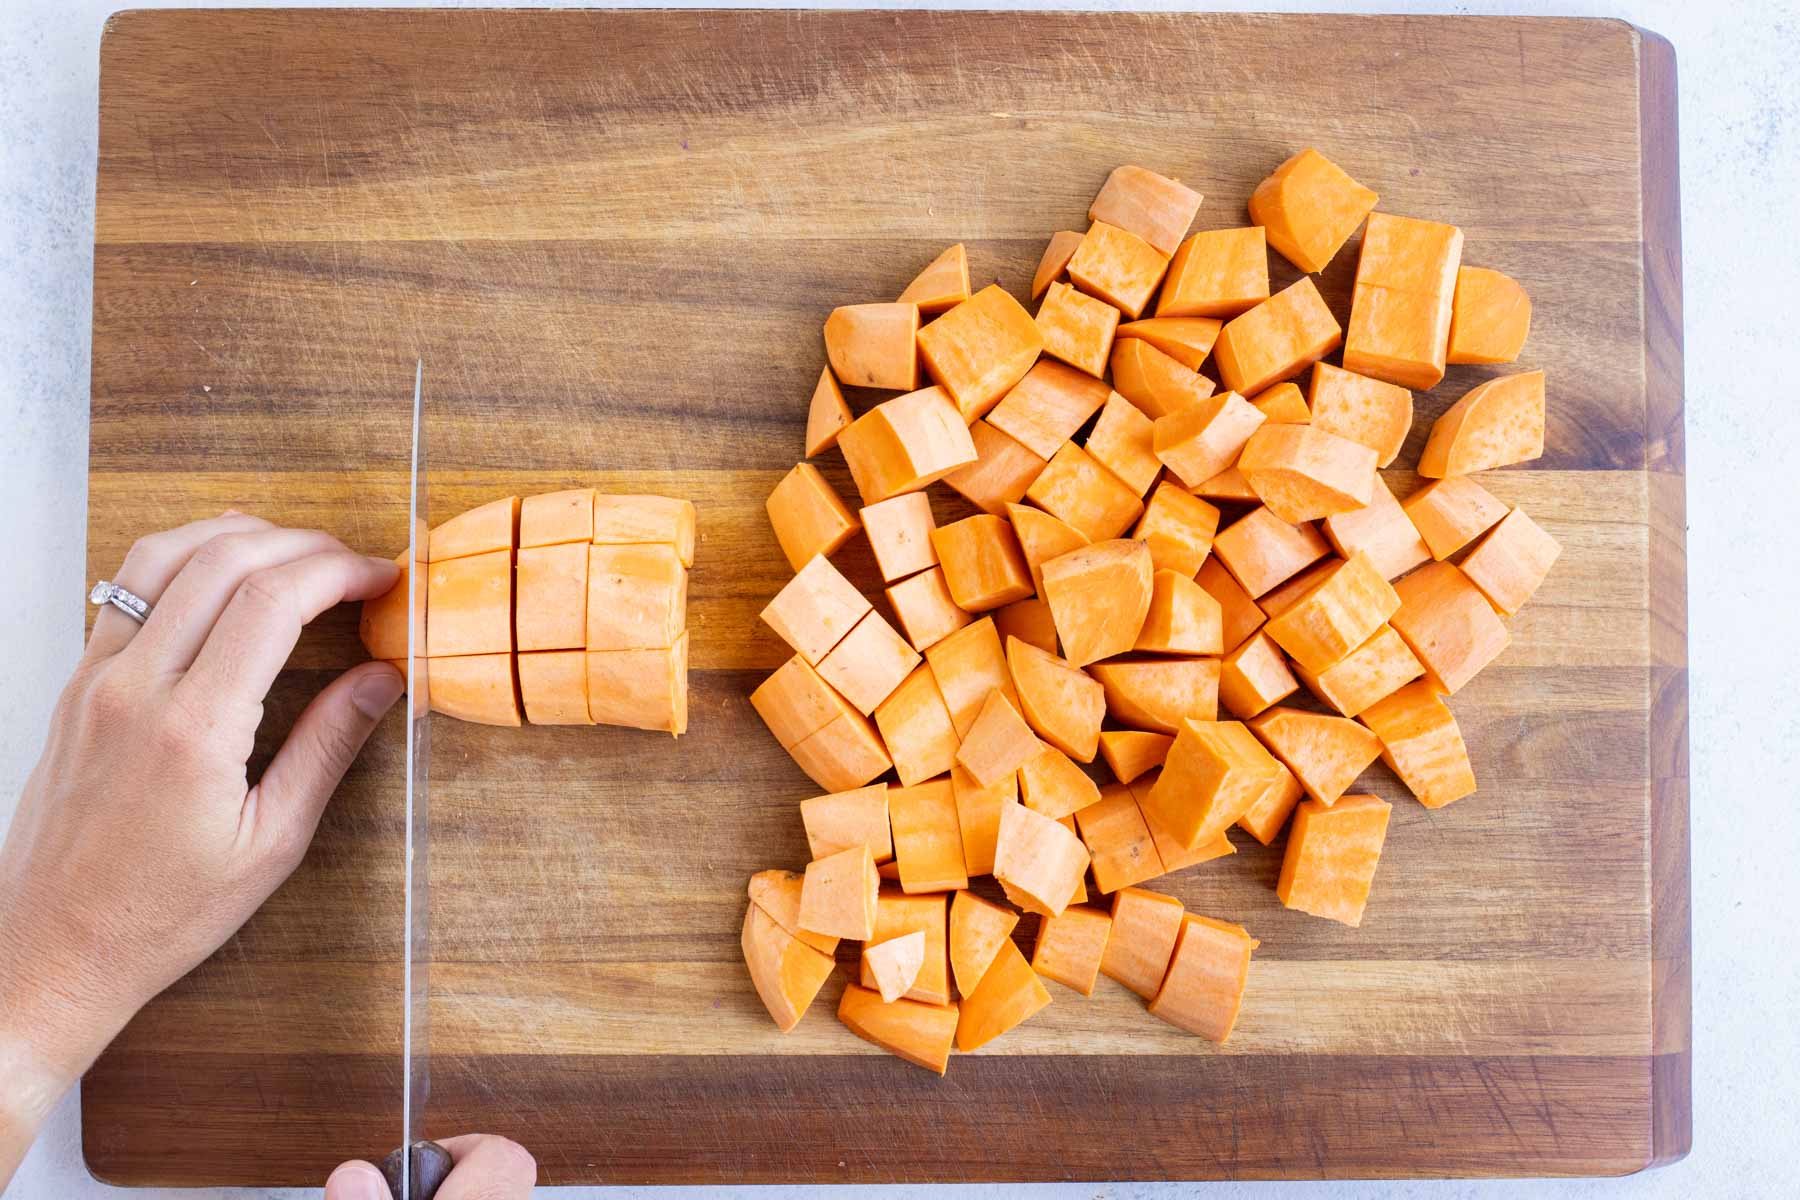 A sharp knife cuts a sweet potato into cubes.